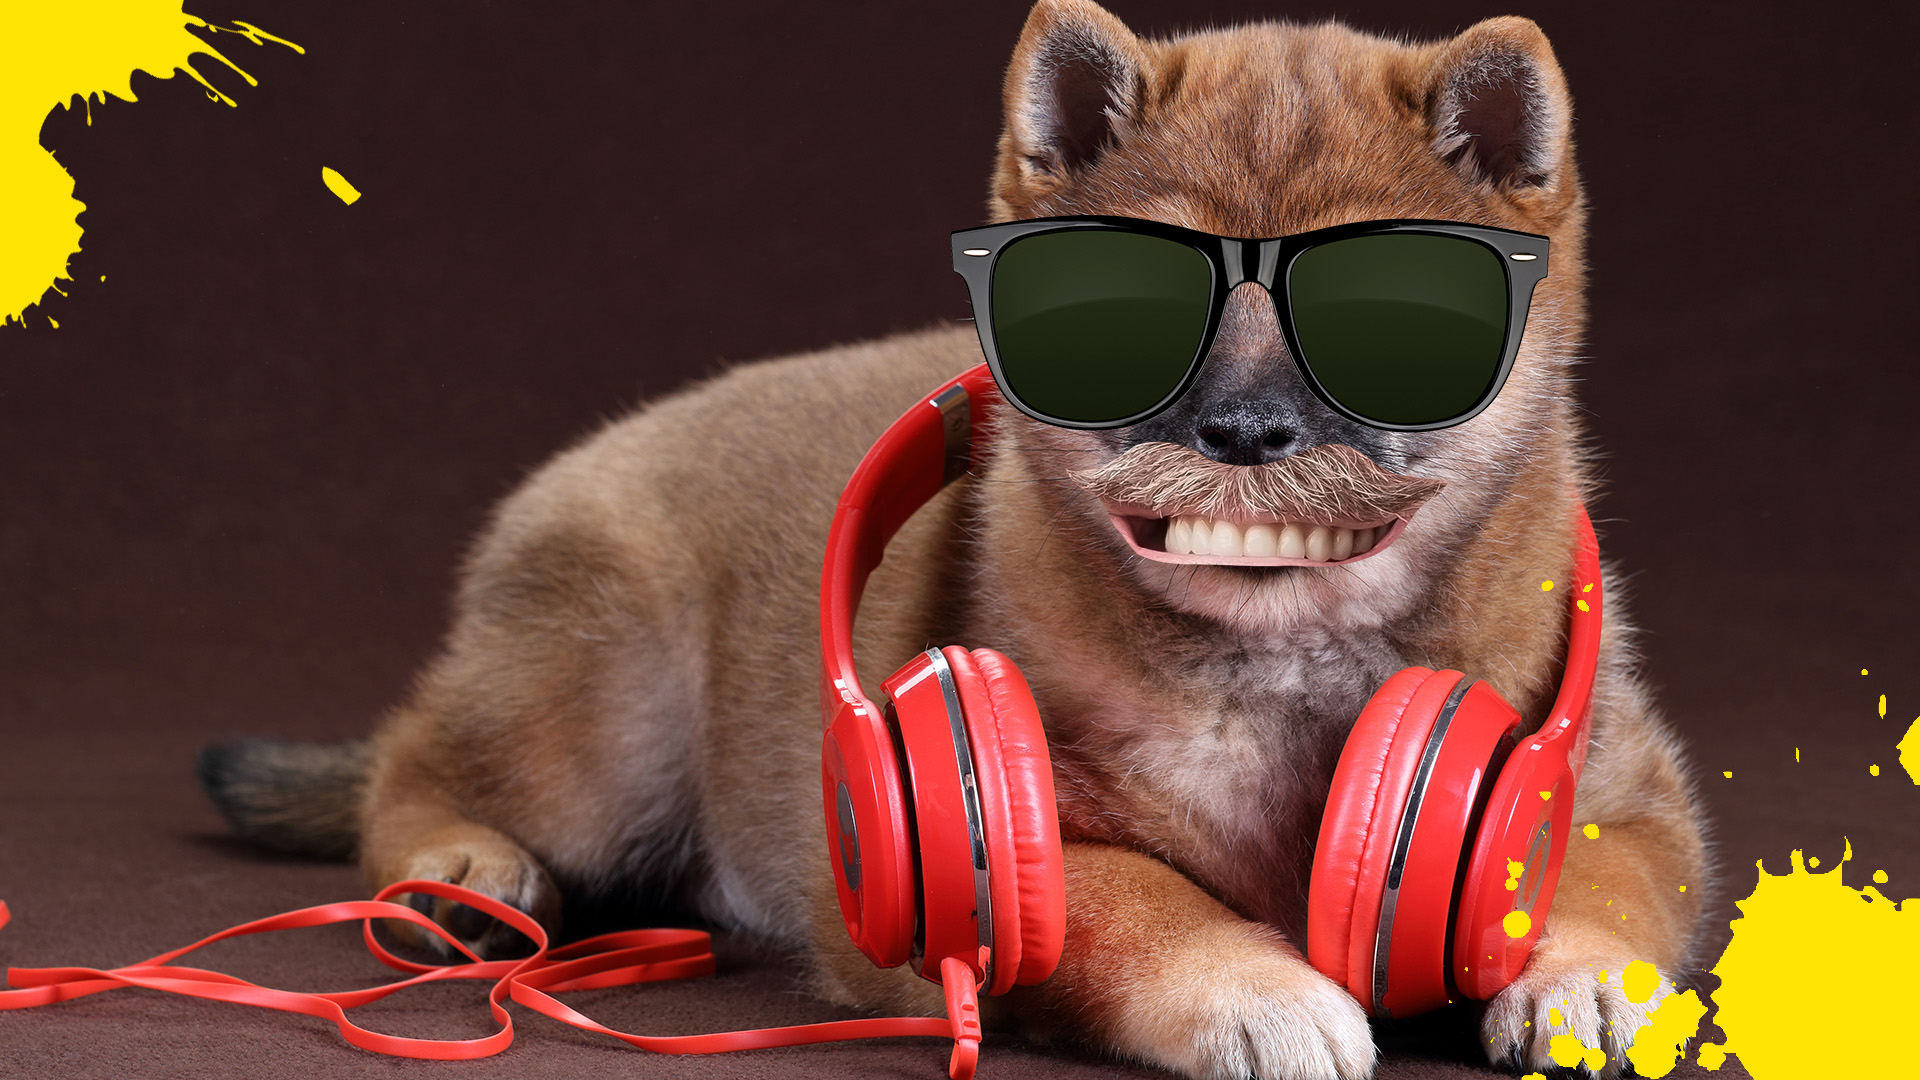 A dog wearing sunglasses and headphones 